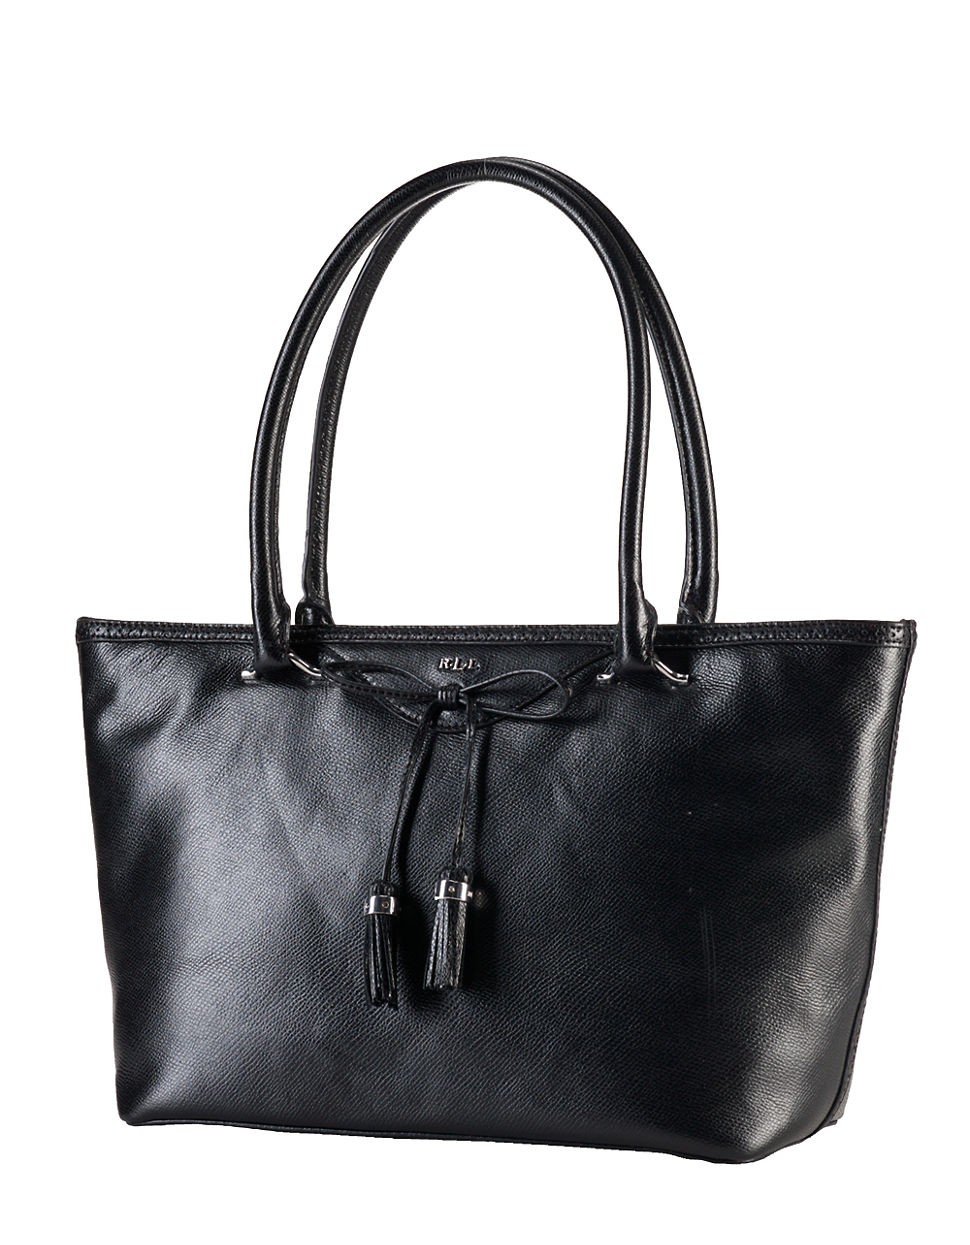 Lauren By Ralph Lauren Dundee Leather Shopper Bag in Black | Lyst